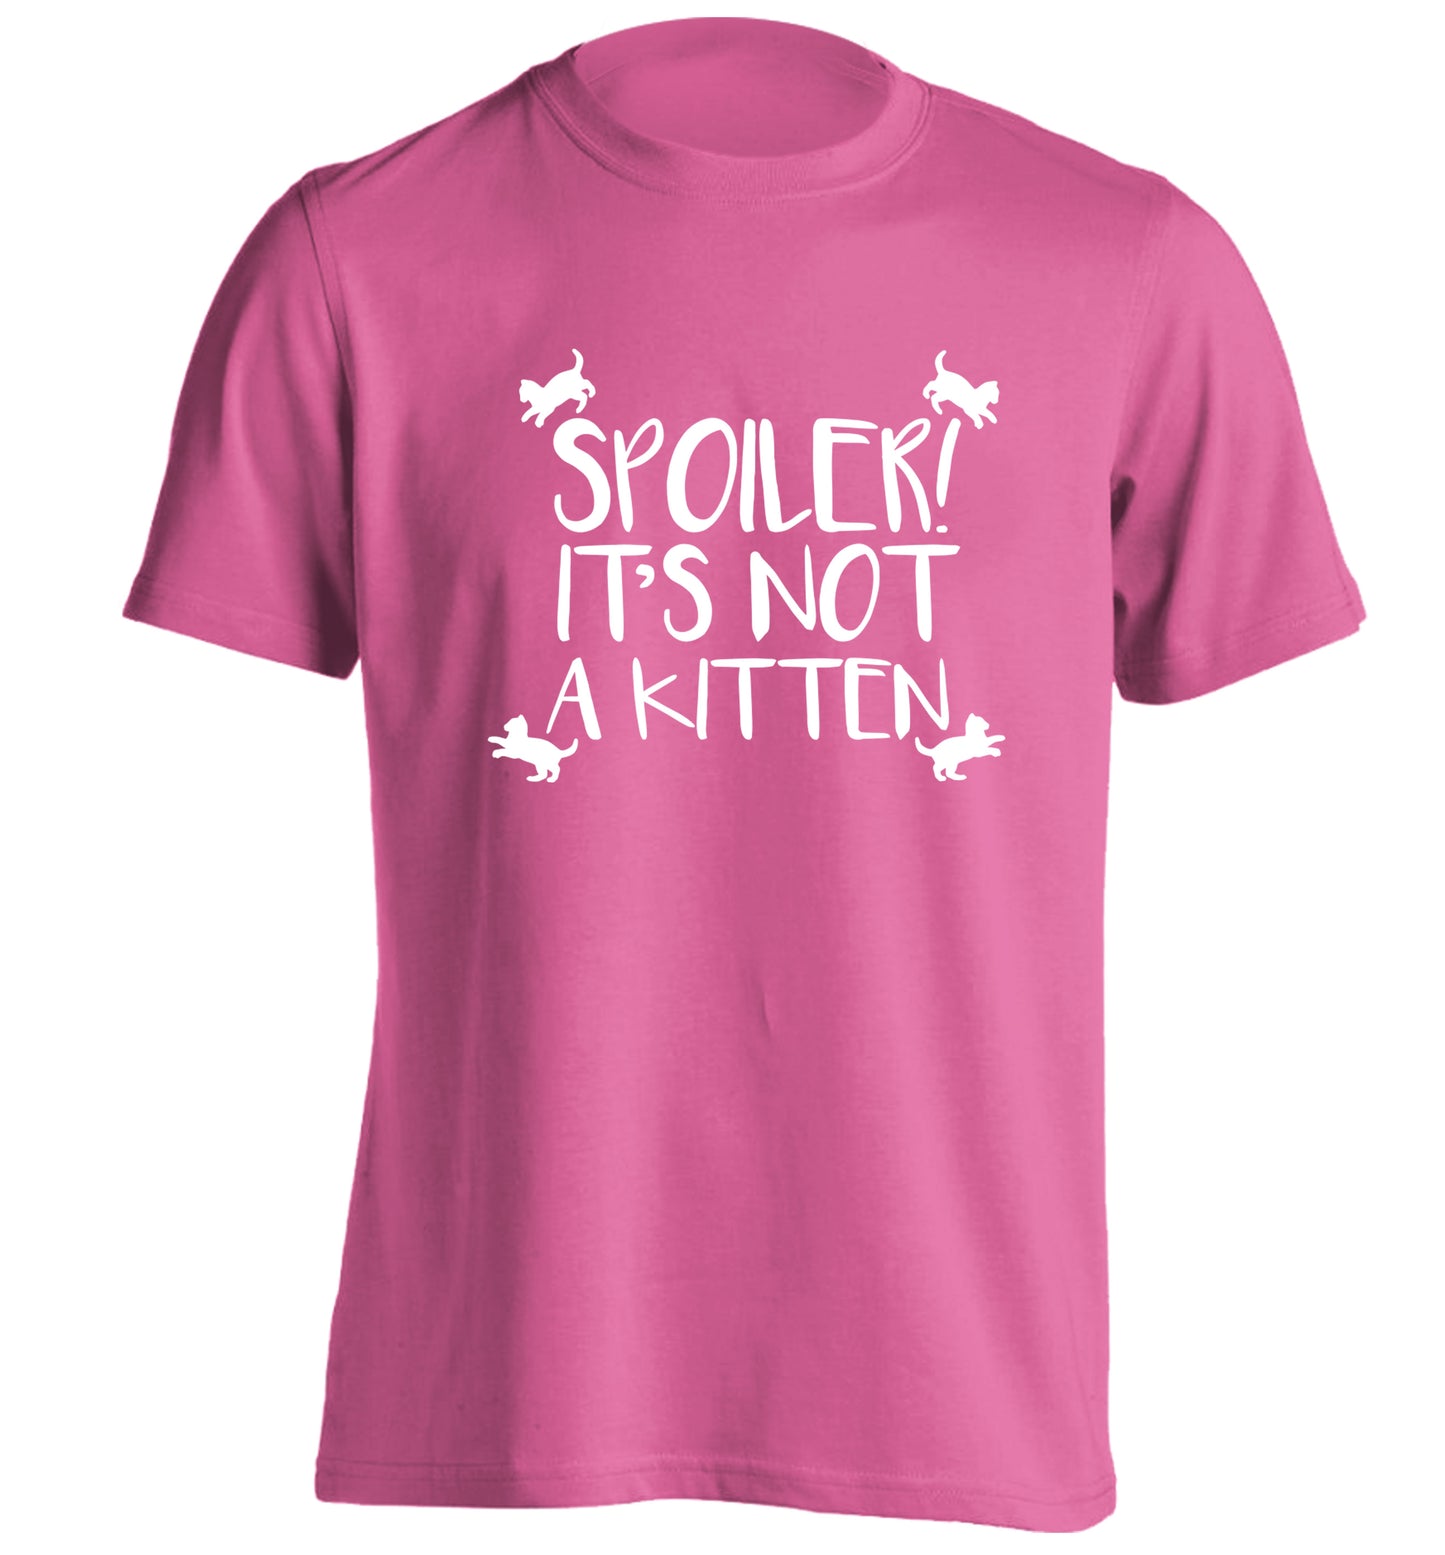 Spoiler it's not a kitten adults unisex pink Tshirt 2XL